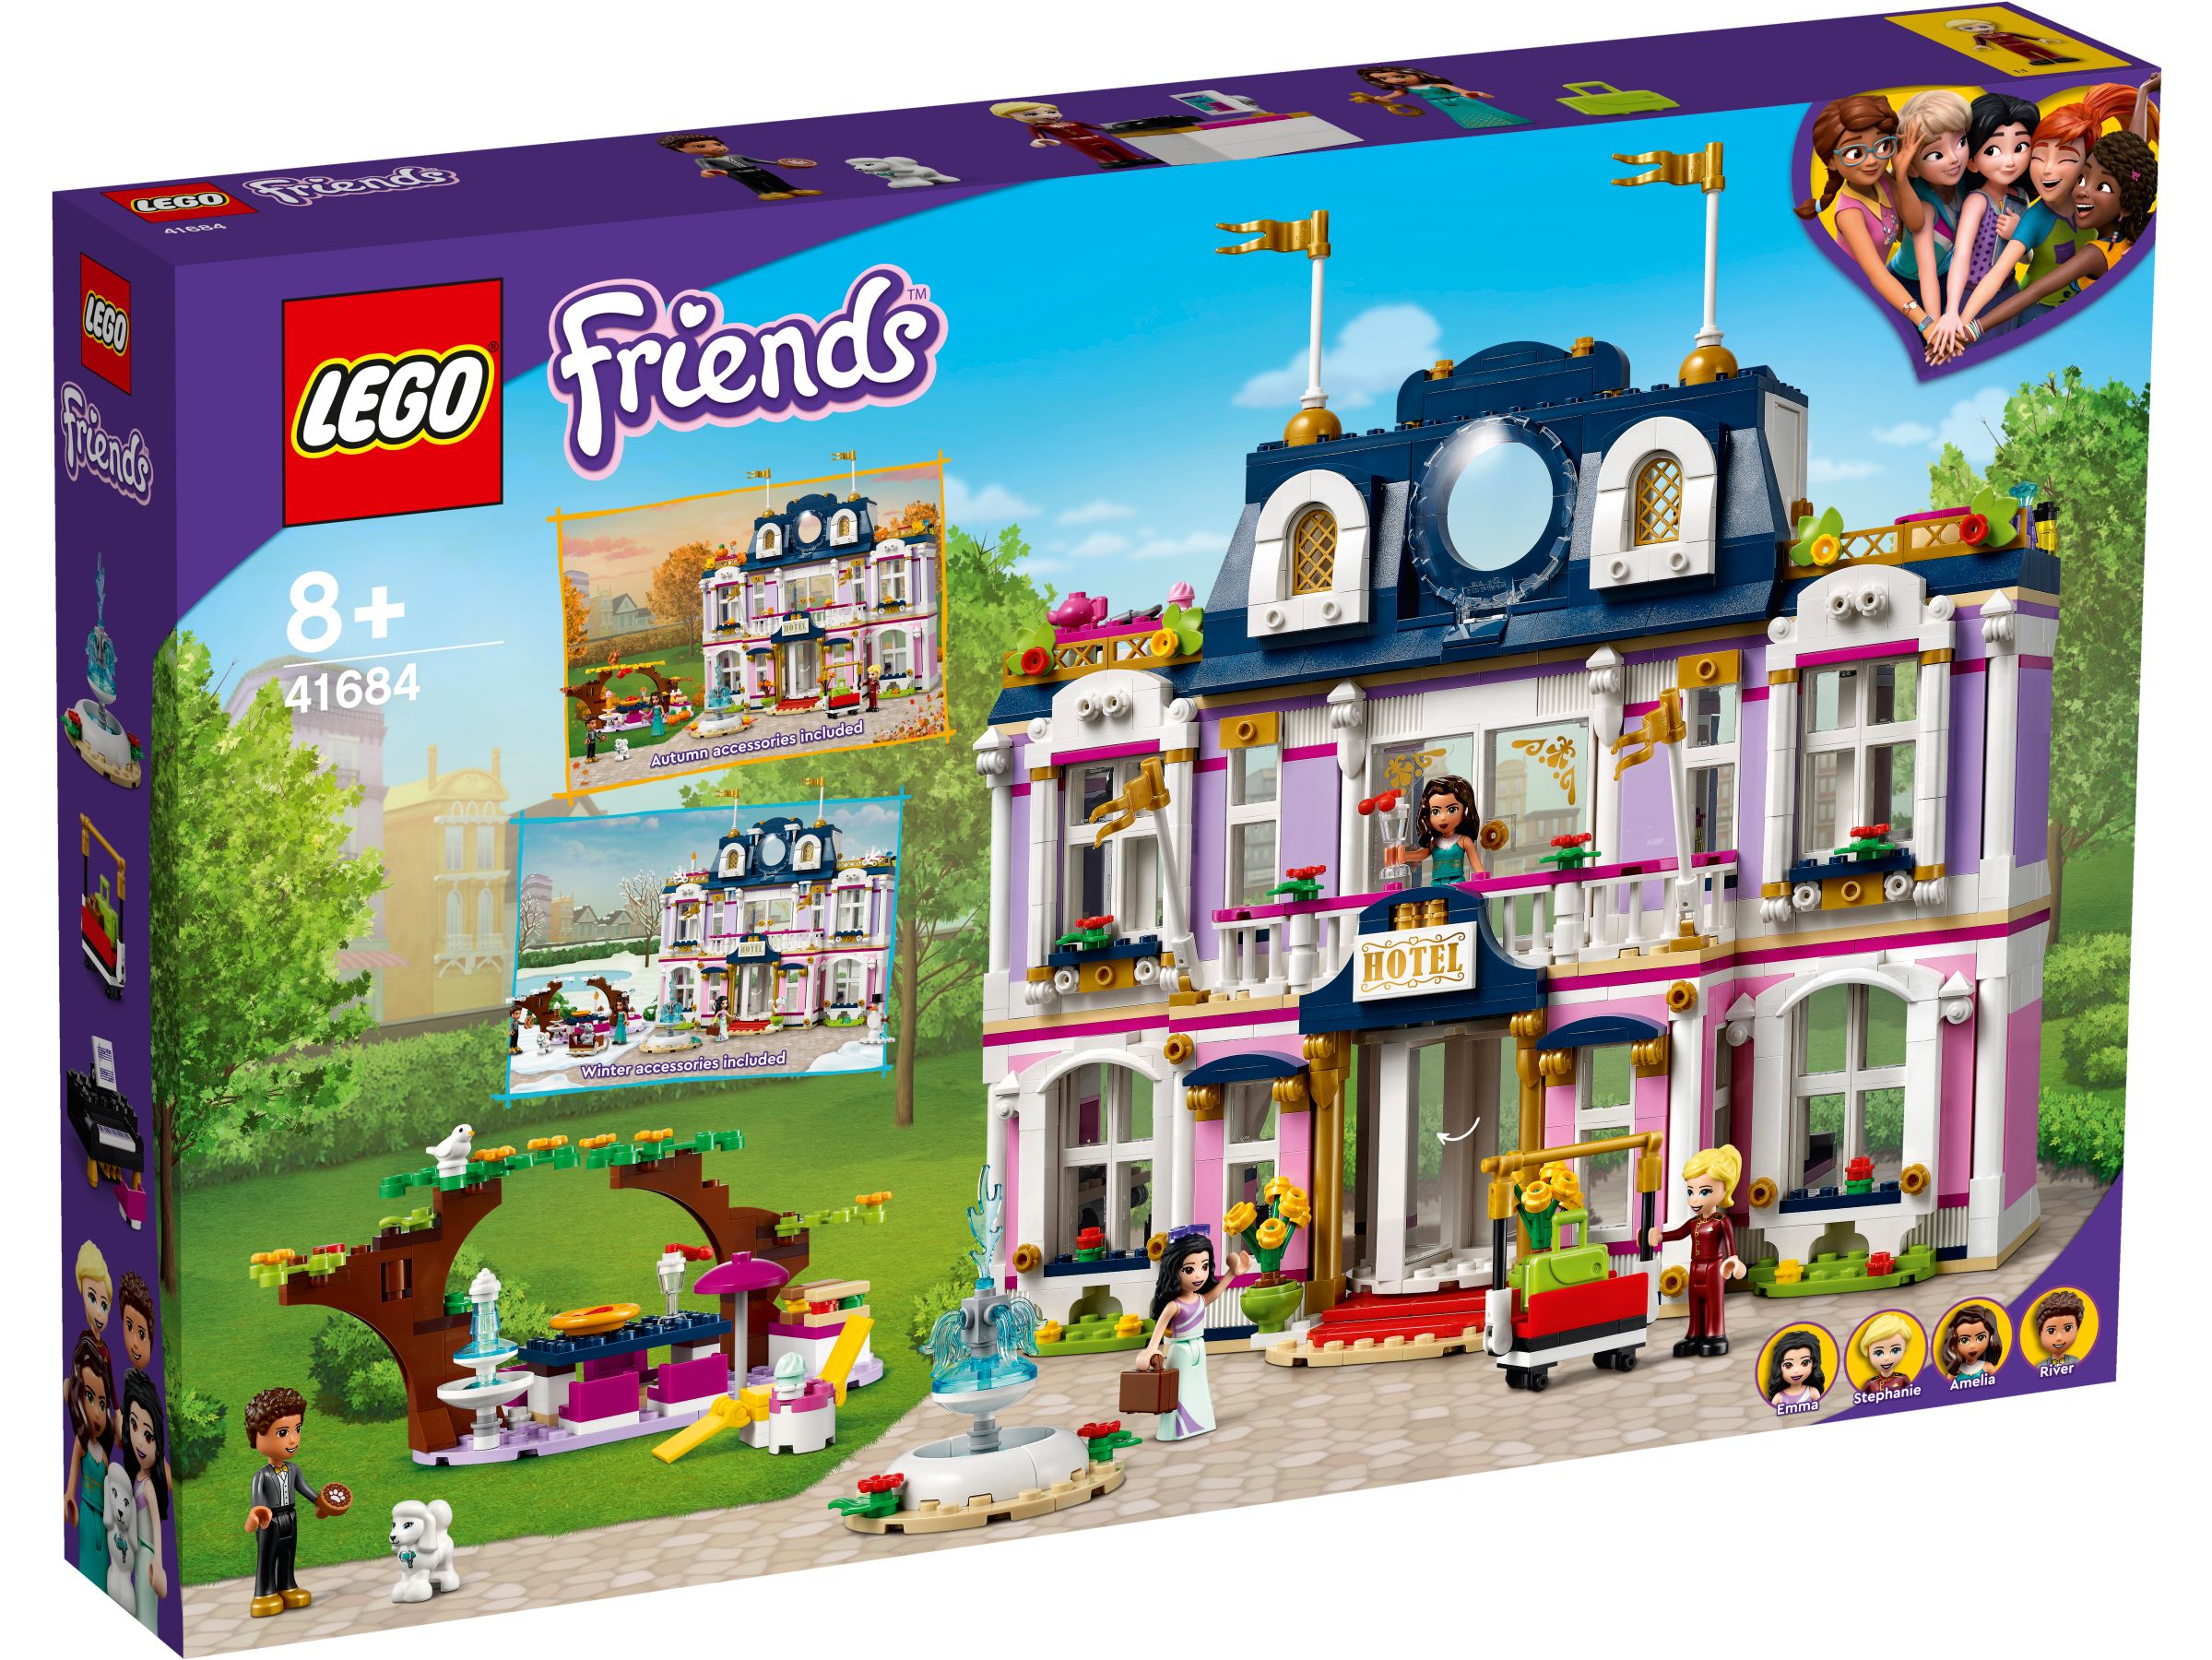 LEGO Friends 41684 Heartlake City Hotel LEGO_41684_box1_v29.jpg